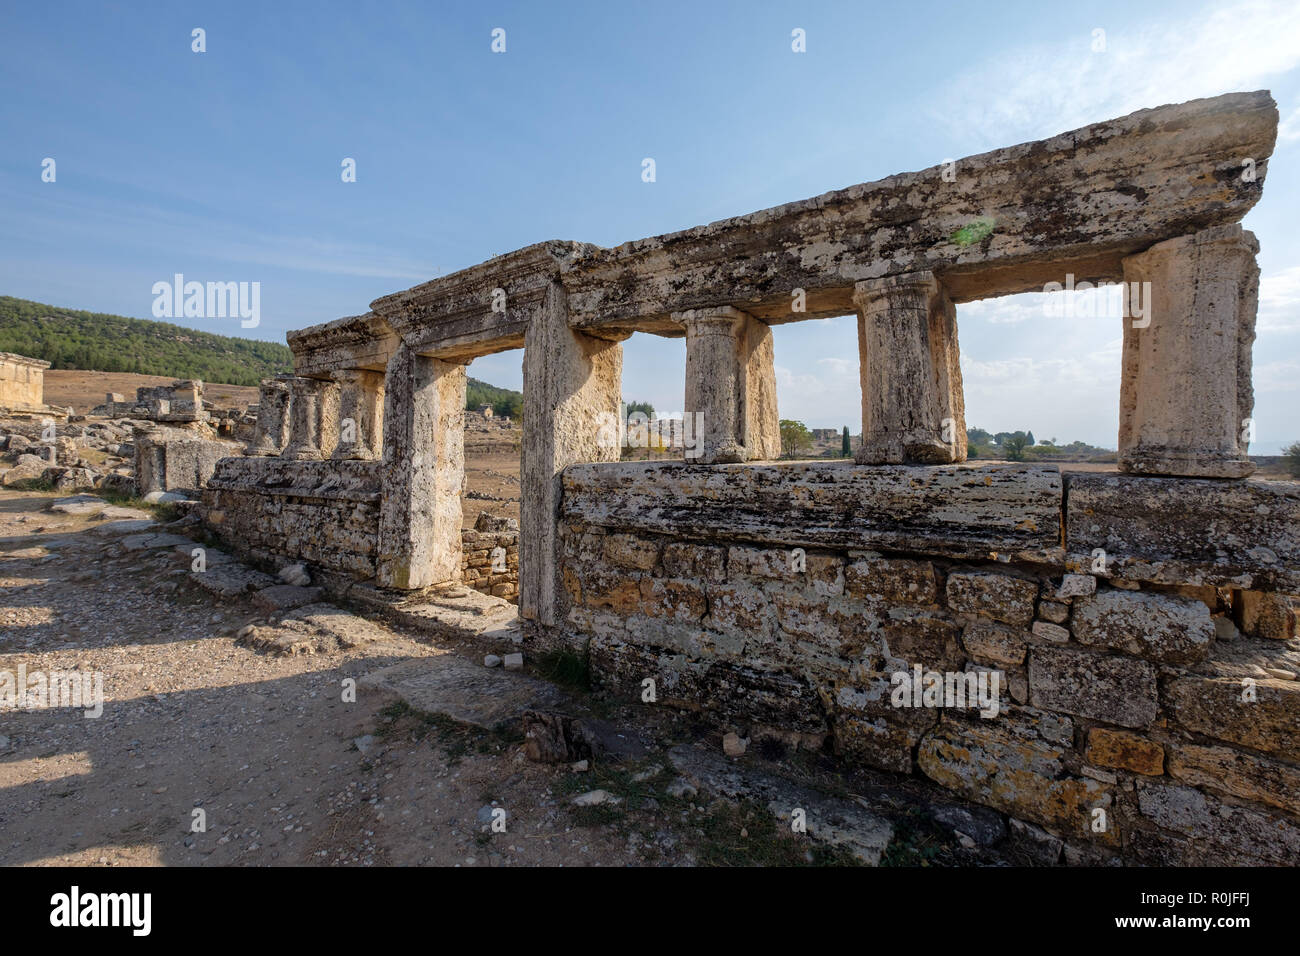 Ruins of the ancient Roman city of Hierapolis, Turkey Stock Photo